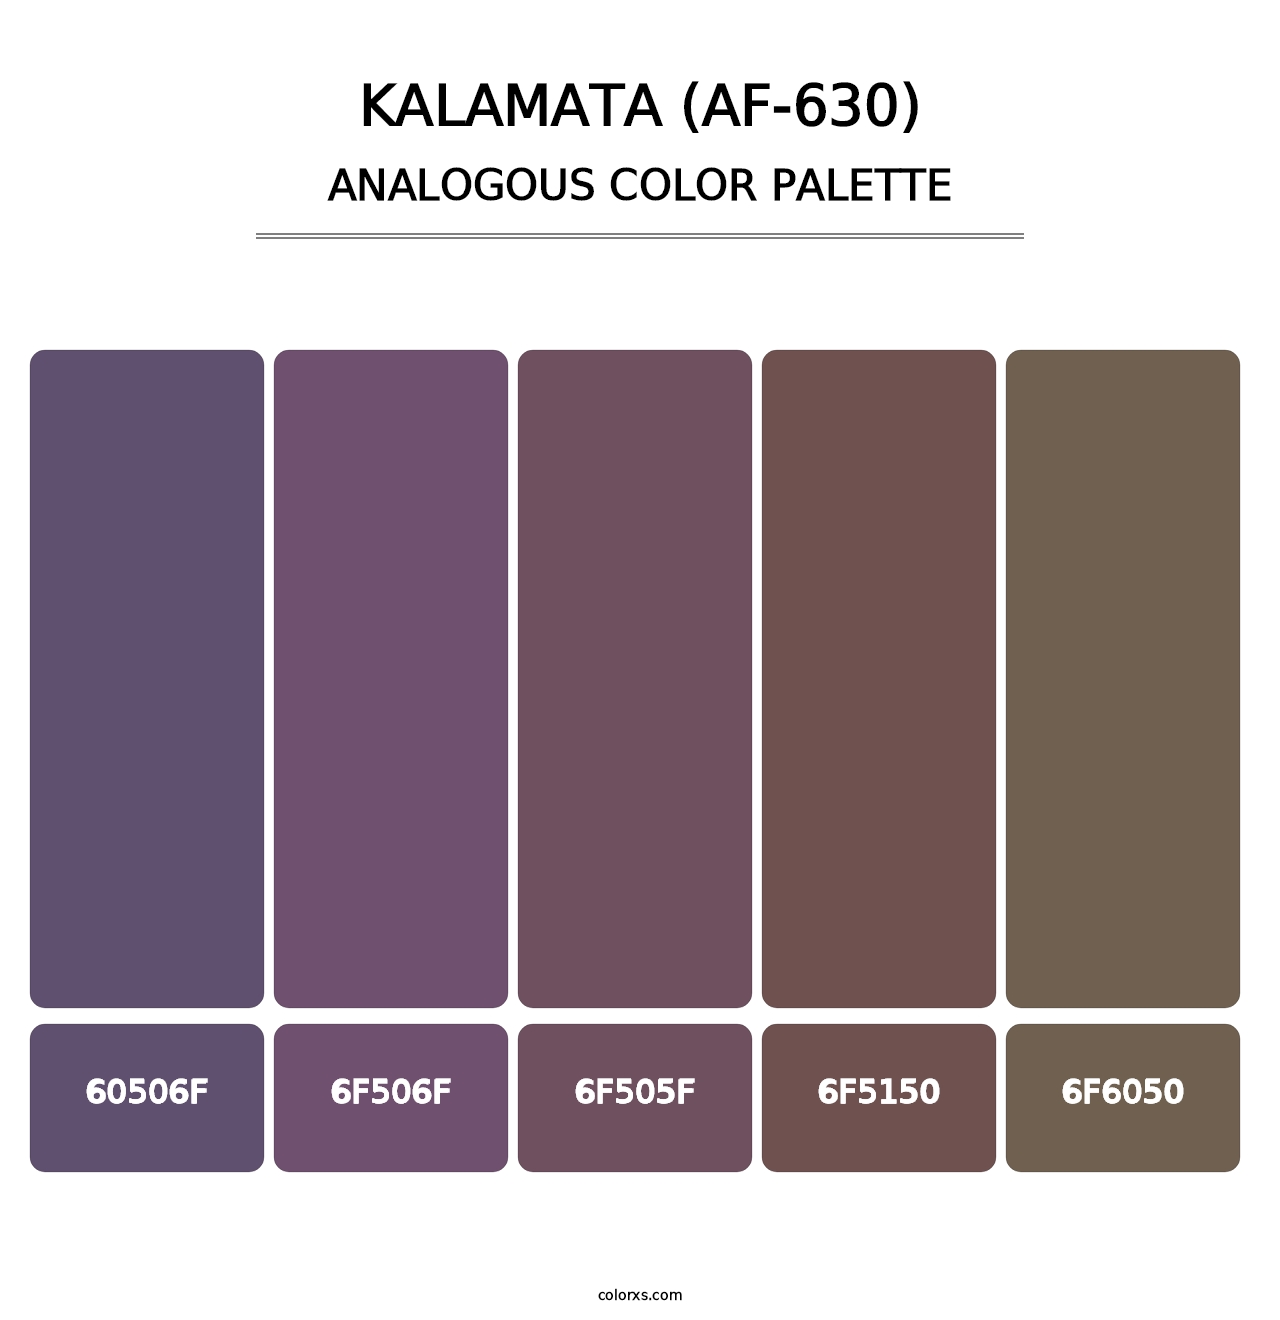 Kalamata (AF-630) - Analogous Color Palette